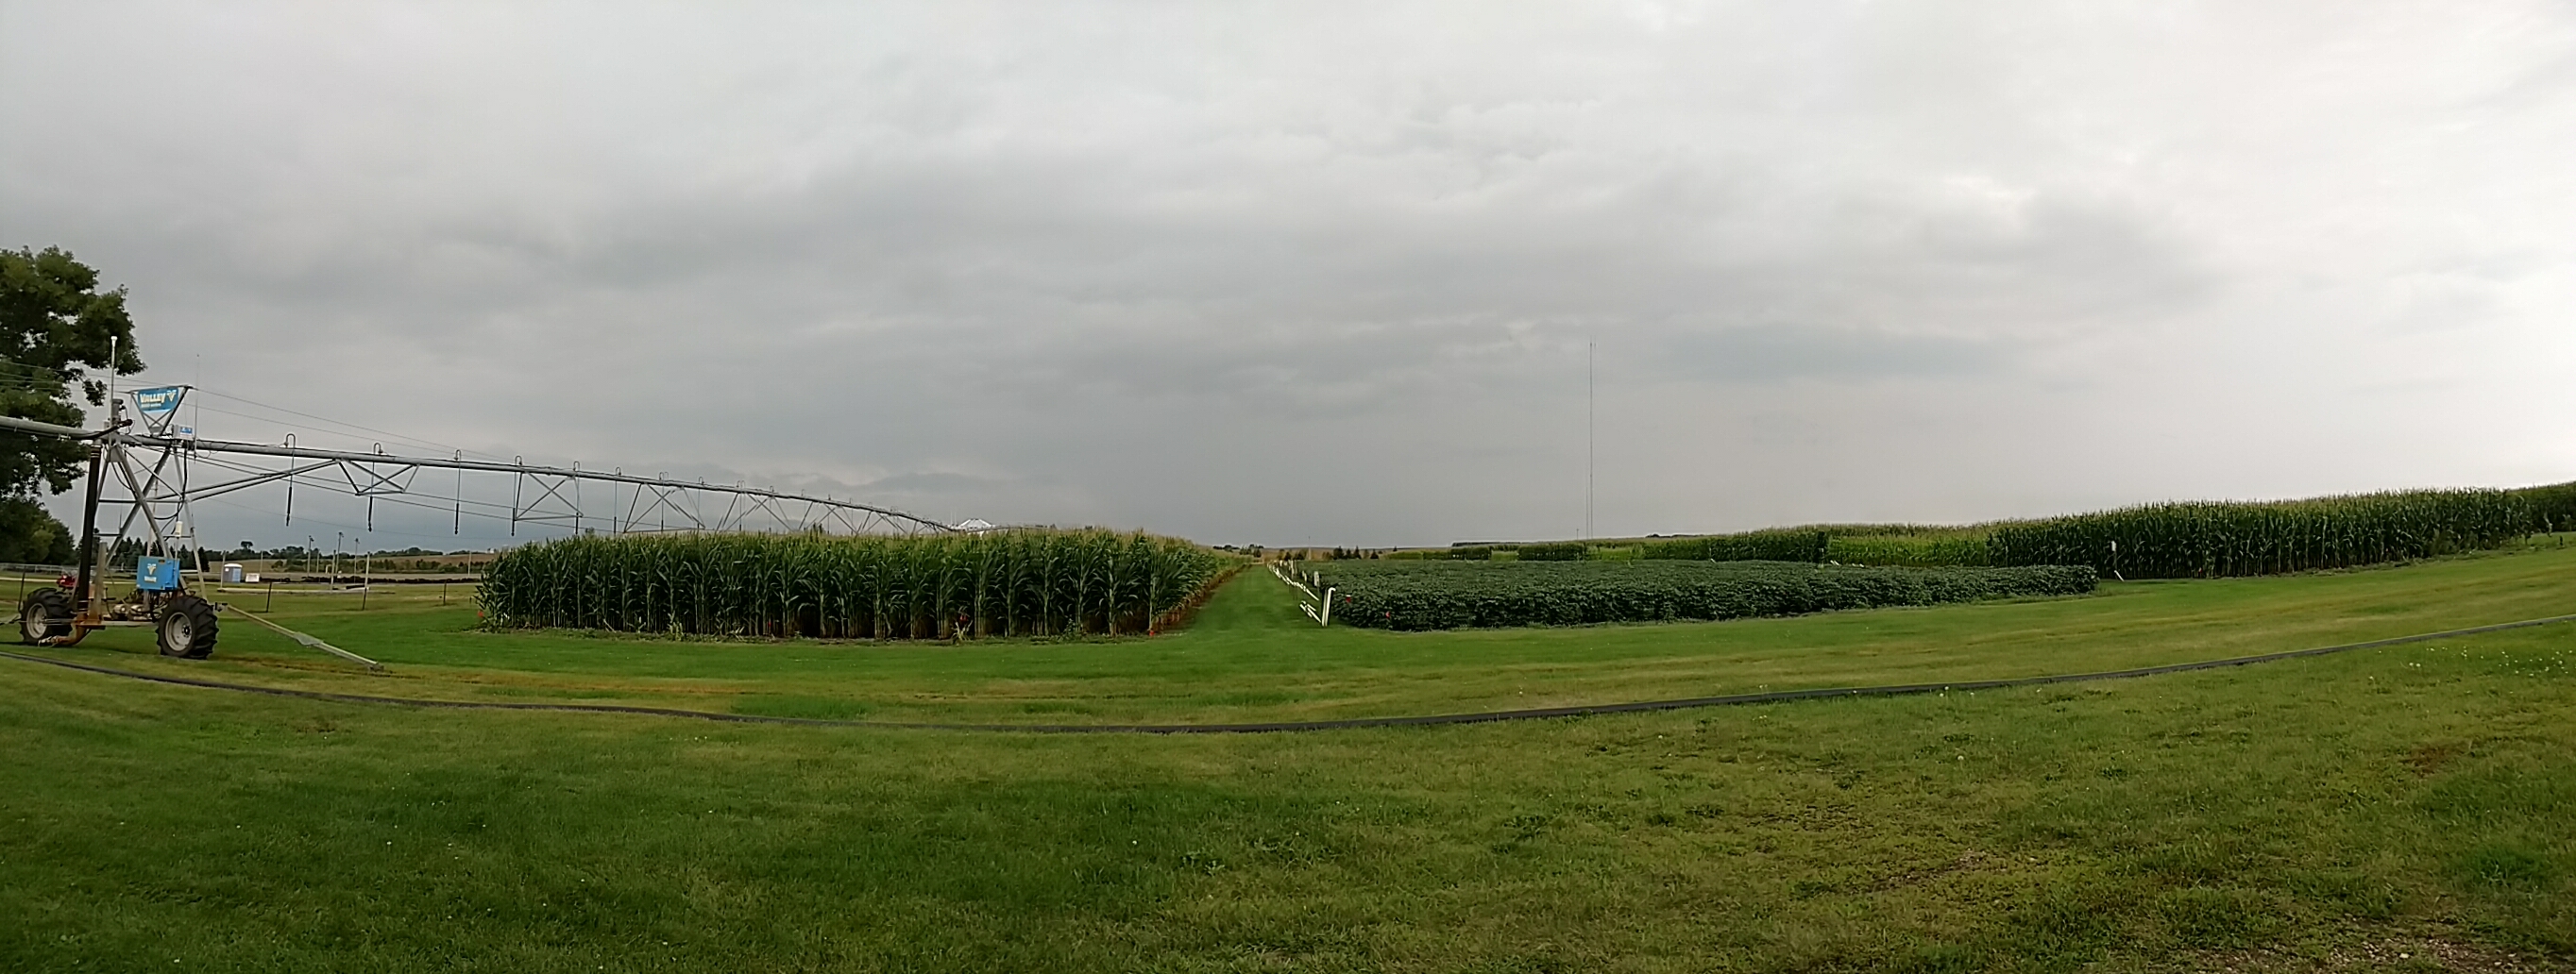 Farm field with irrigation system at Rosholt Farm.